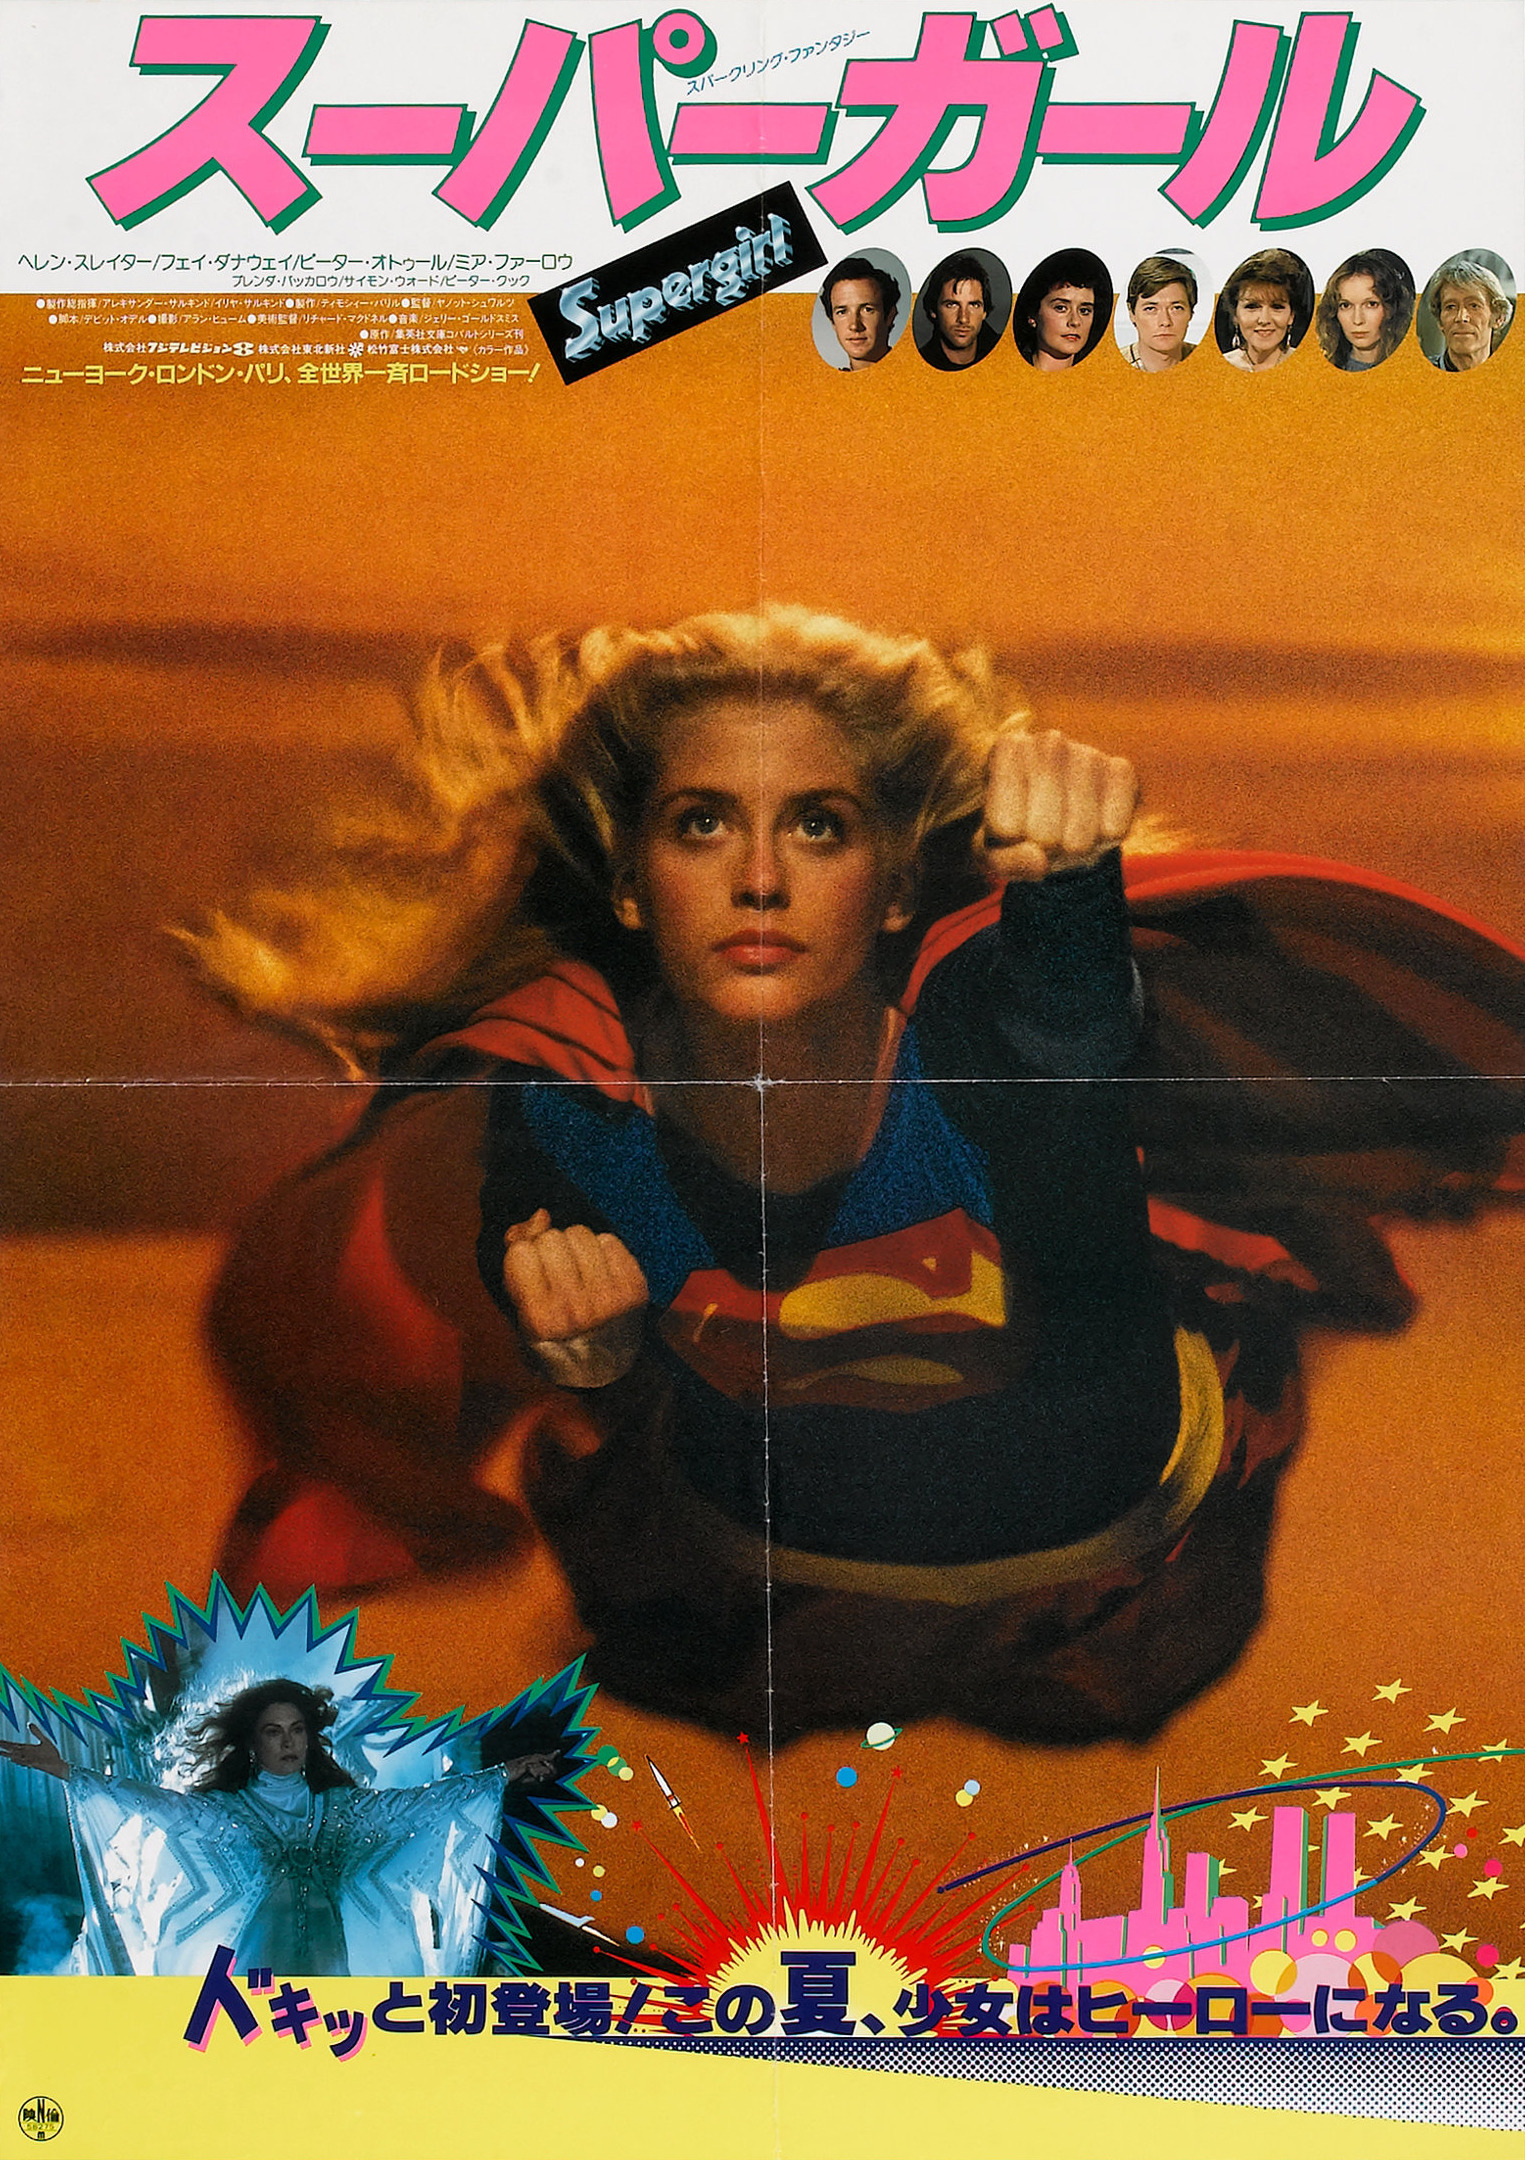 Mega Sized Movie Poster Image for Supergirl (#6 of 8)